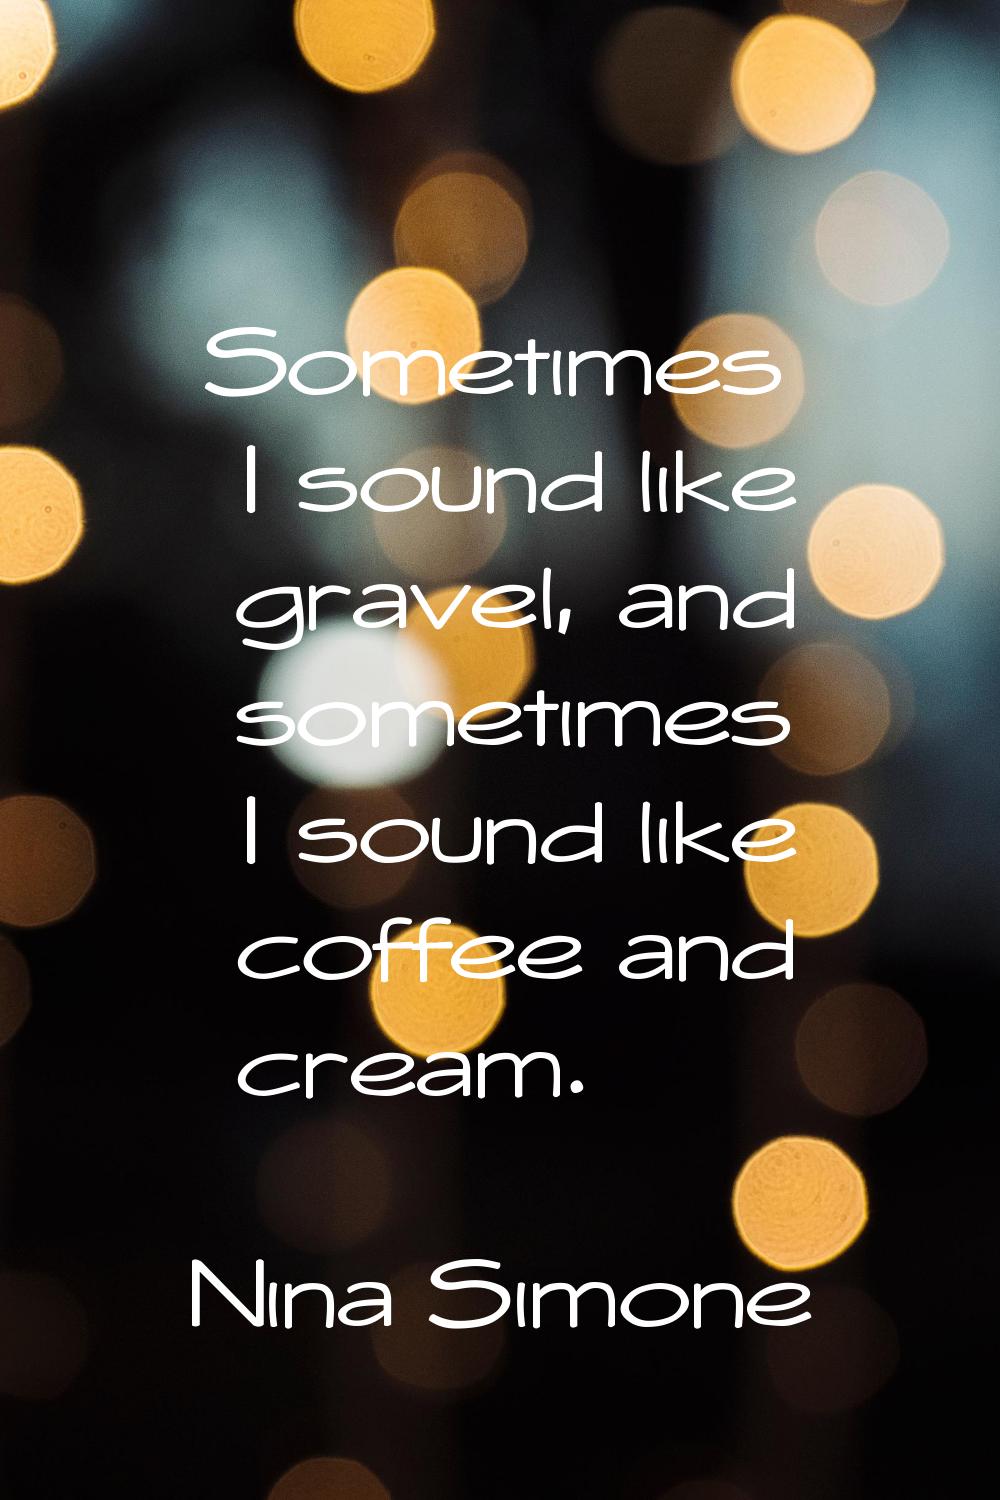 Sometimes I sound like gravel, and sometimes I sound like coffee and cream.